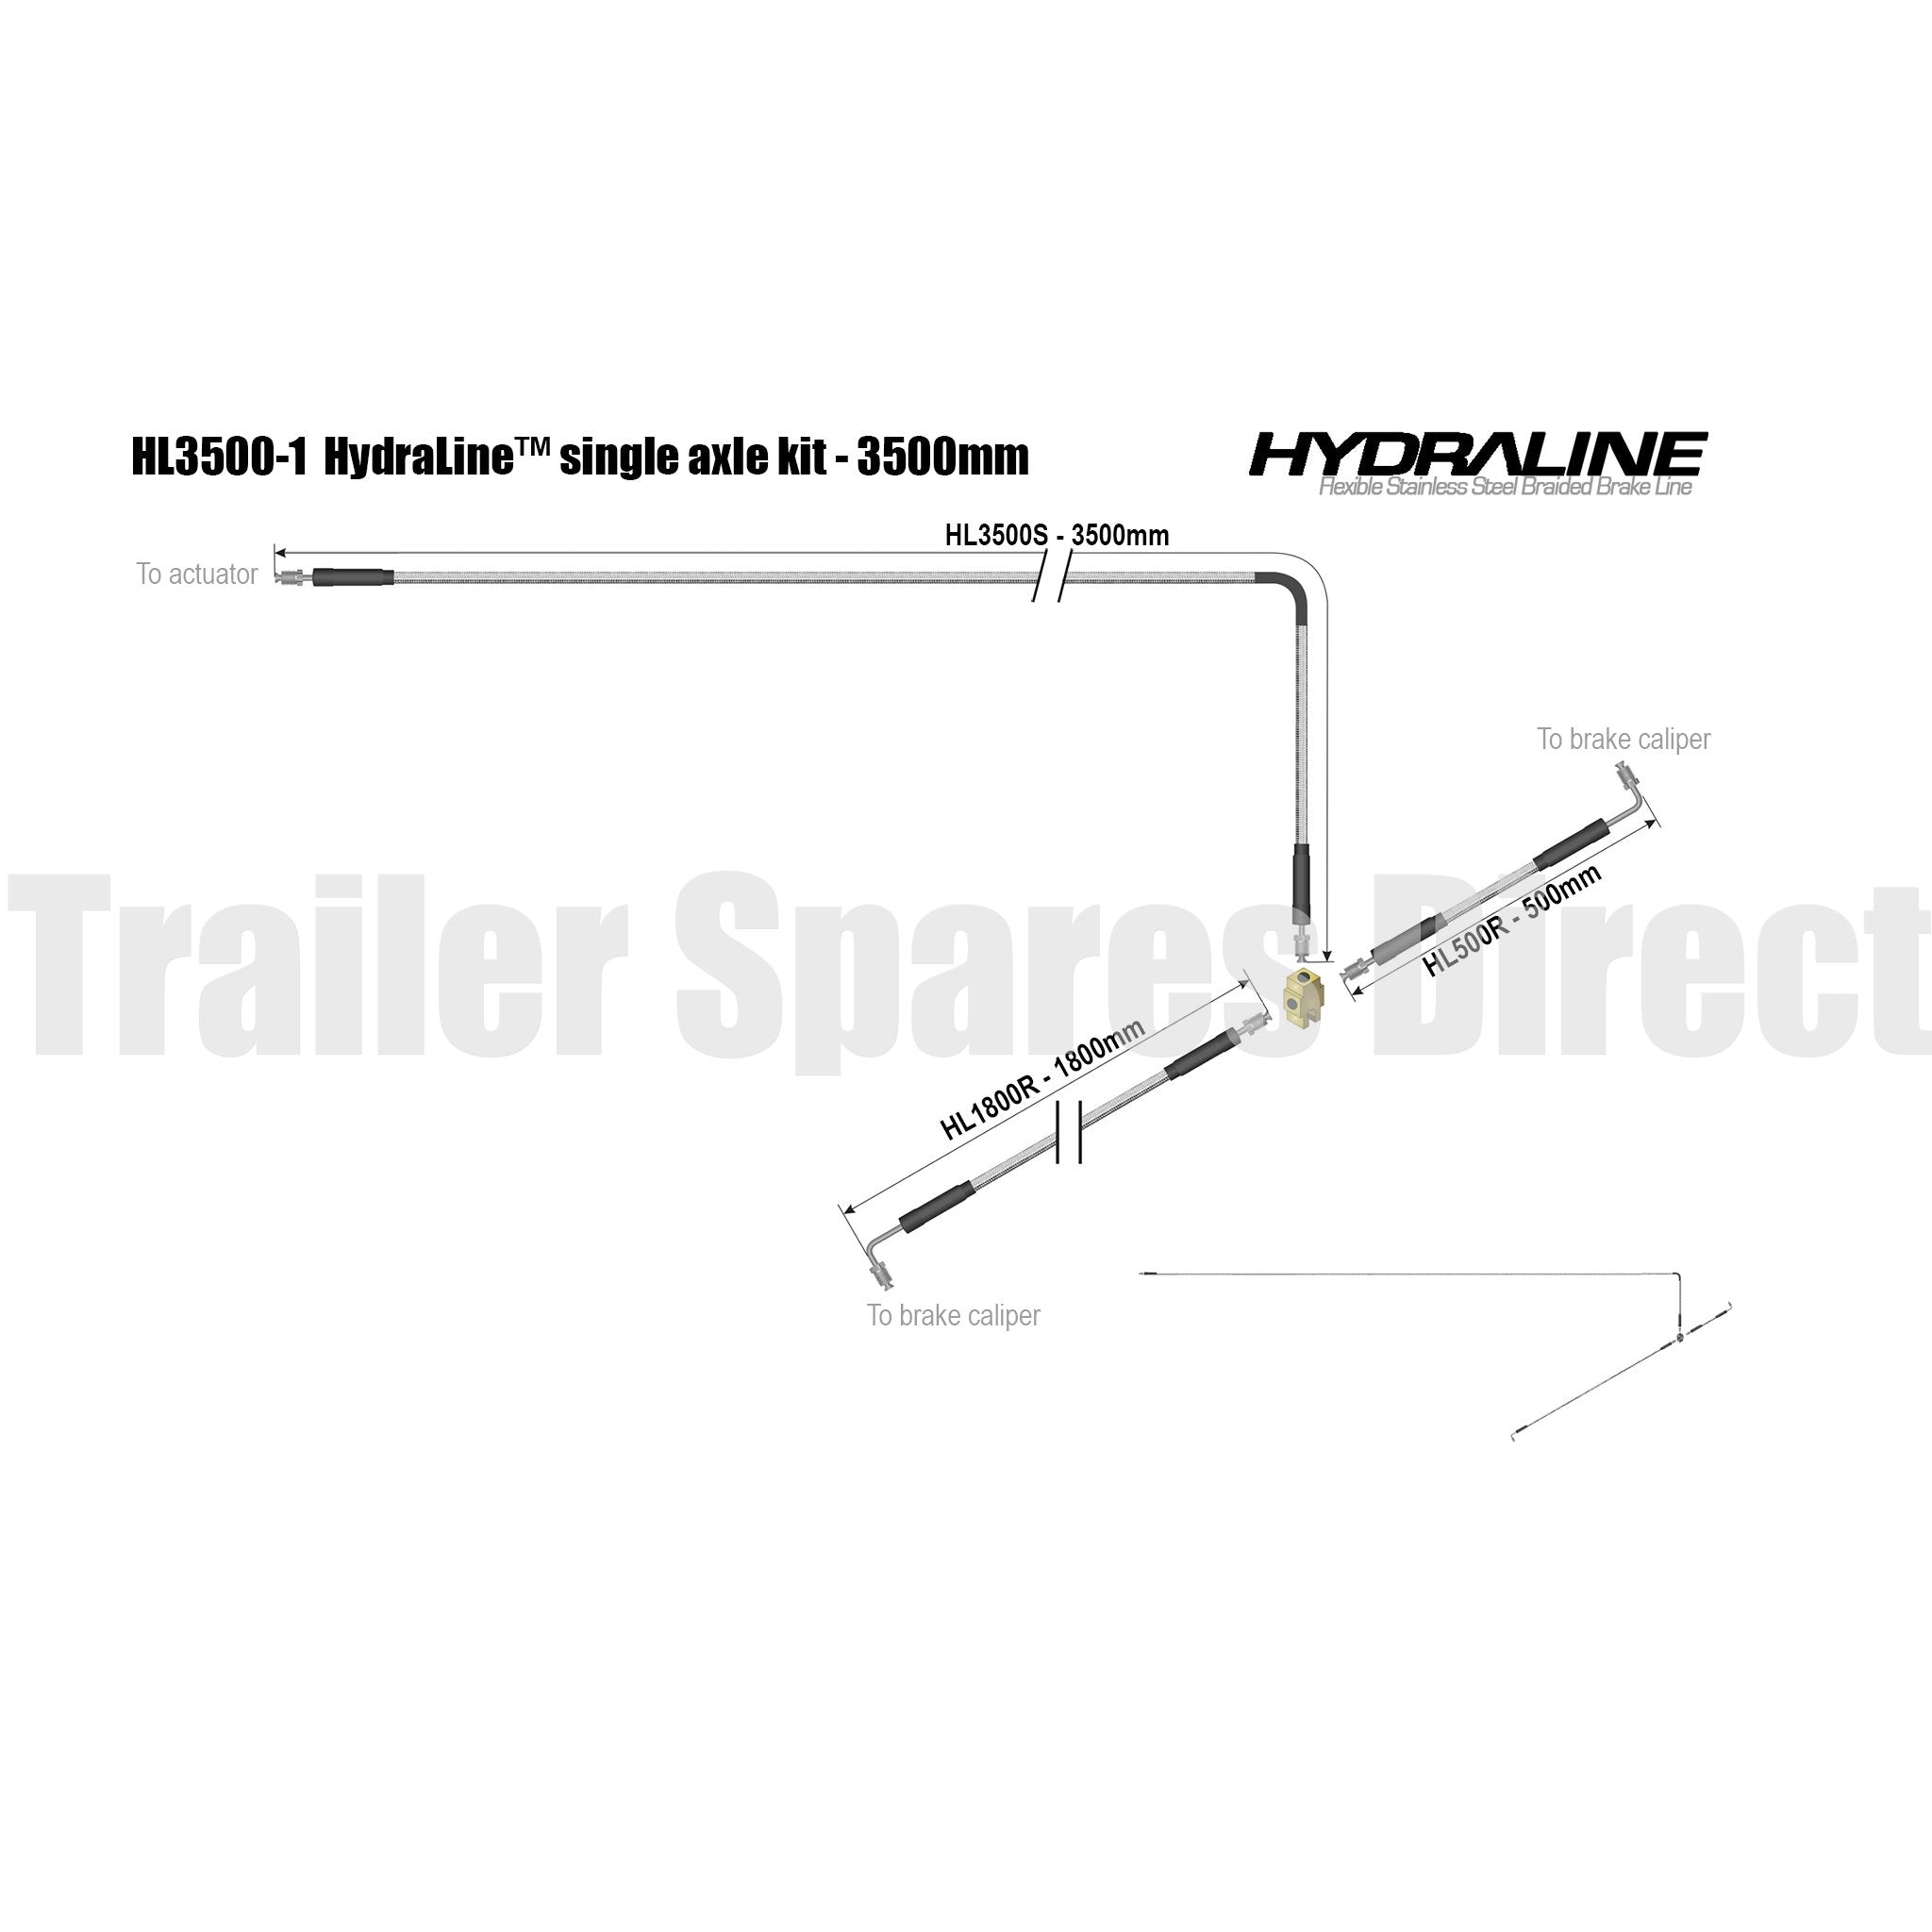 Hydraline kit 3500mm single axle diagram